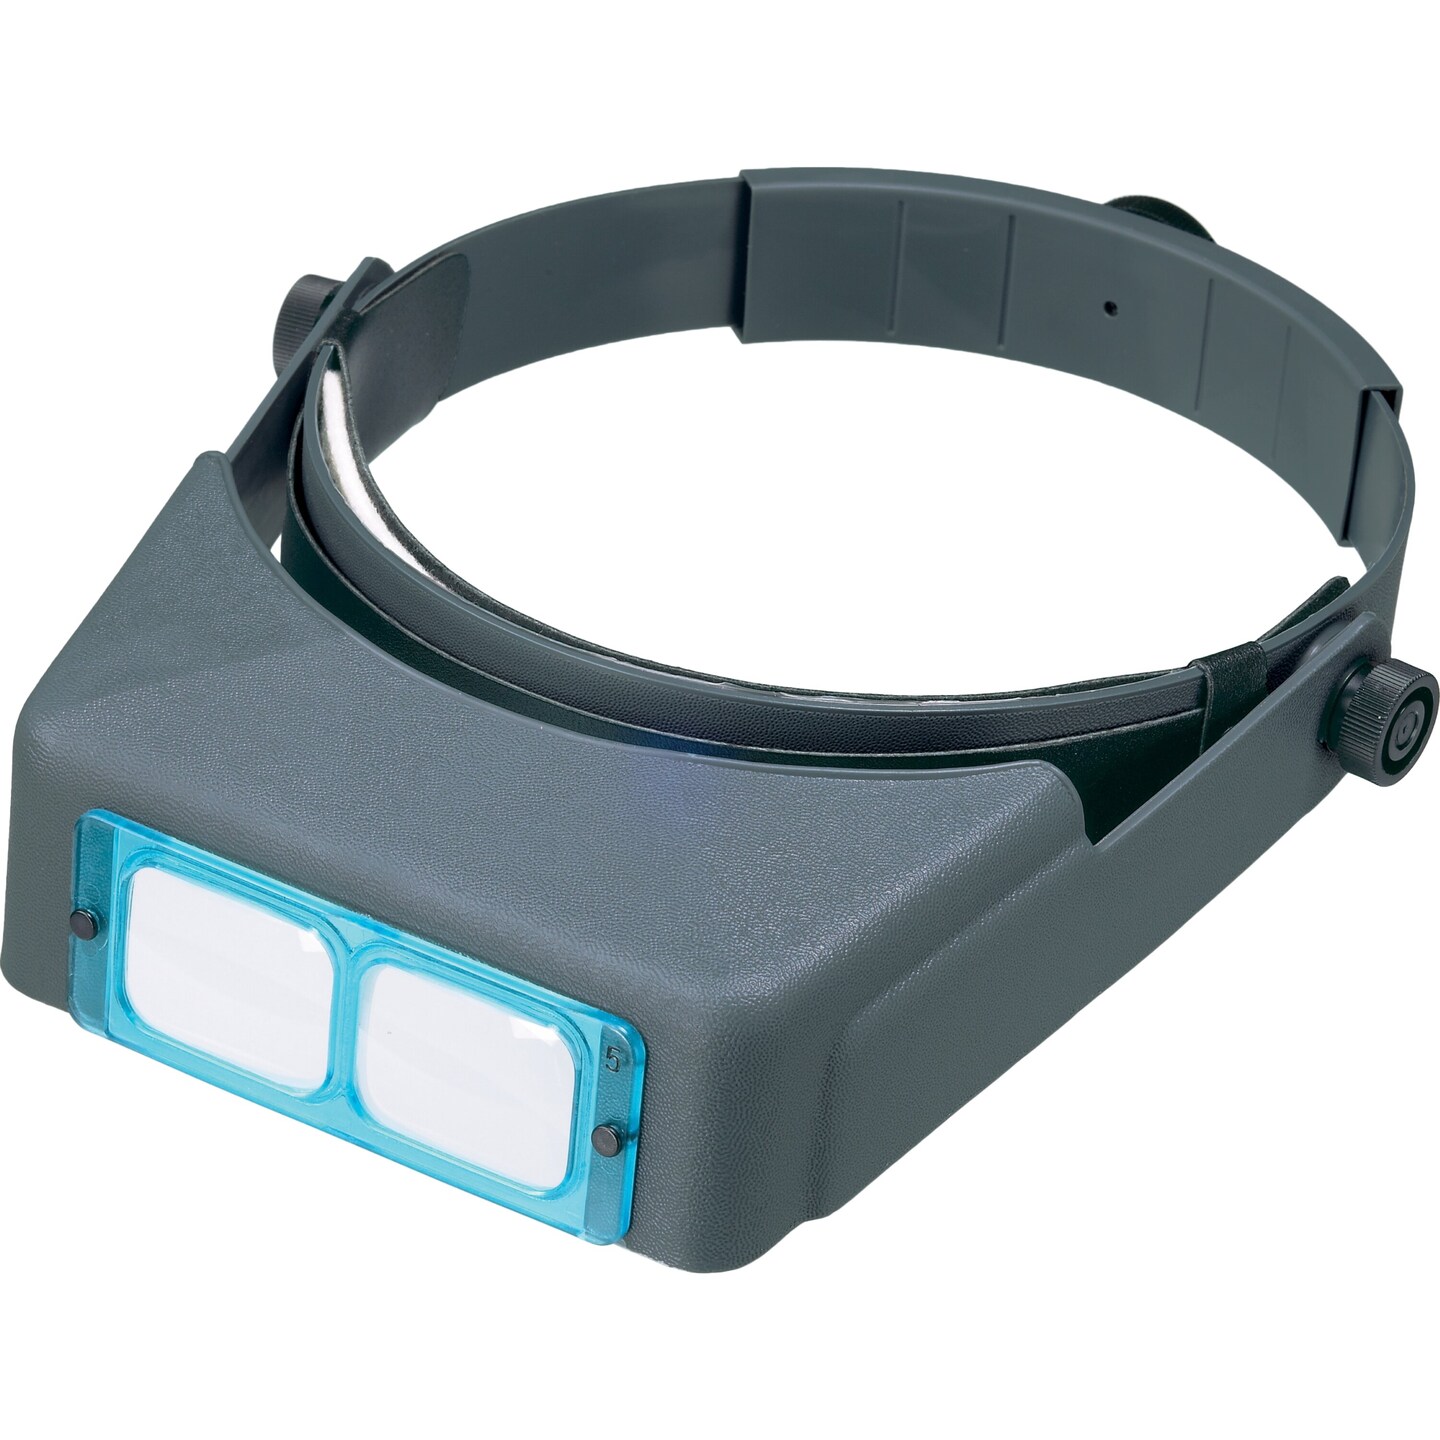 Donegan DA-0 OptiVISOR Headband Magnifier, without Lensplate by Donegan Optical